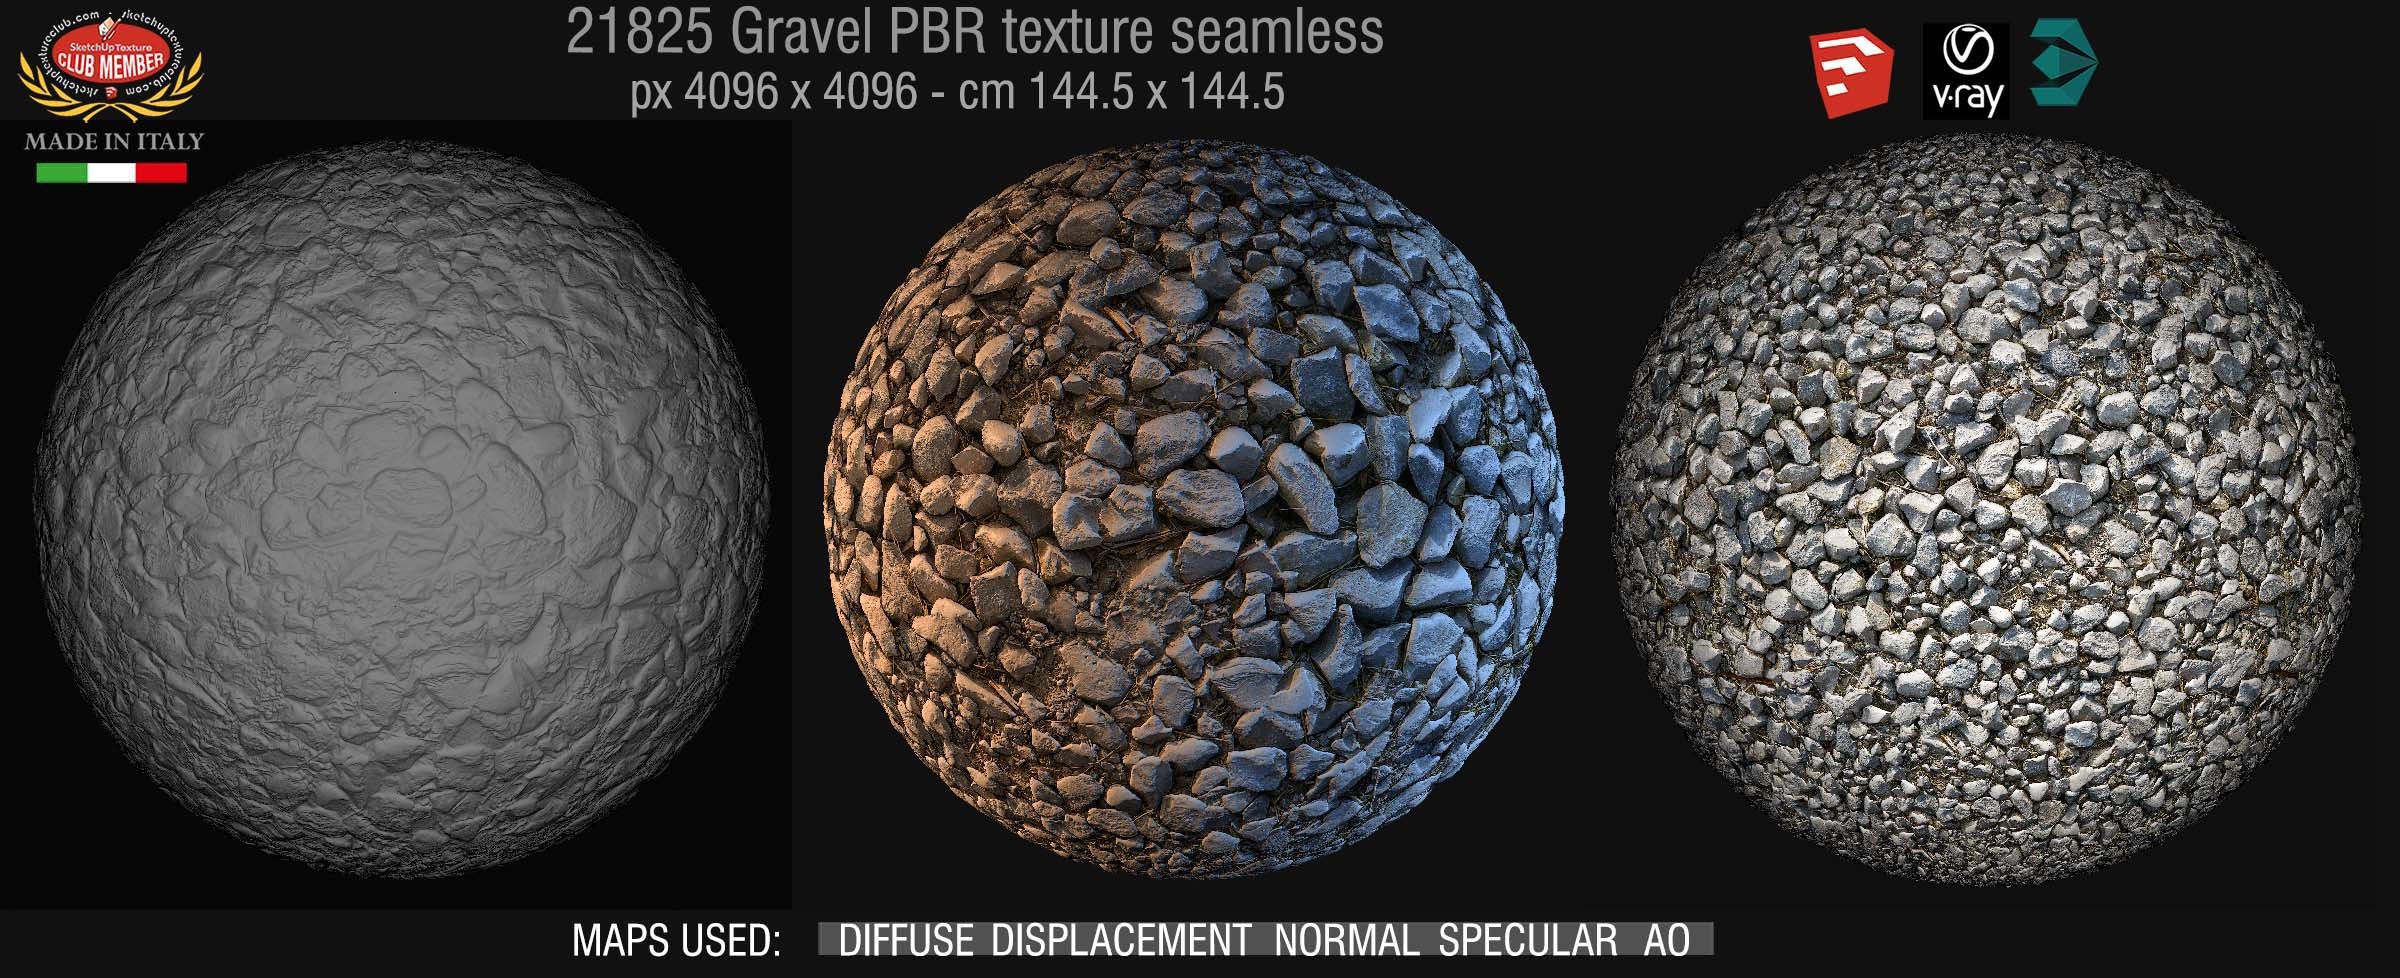 21825 Gravel PBR texture seamless DEMO